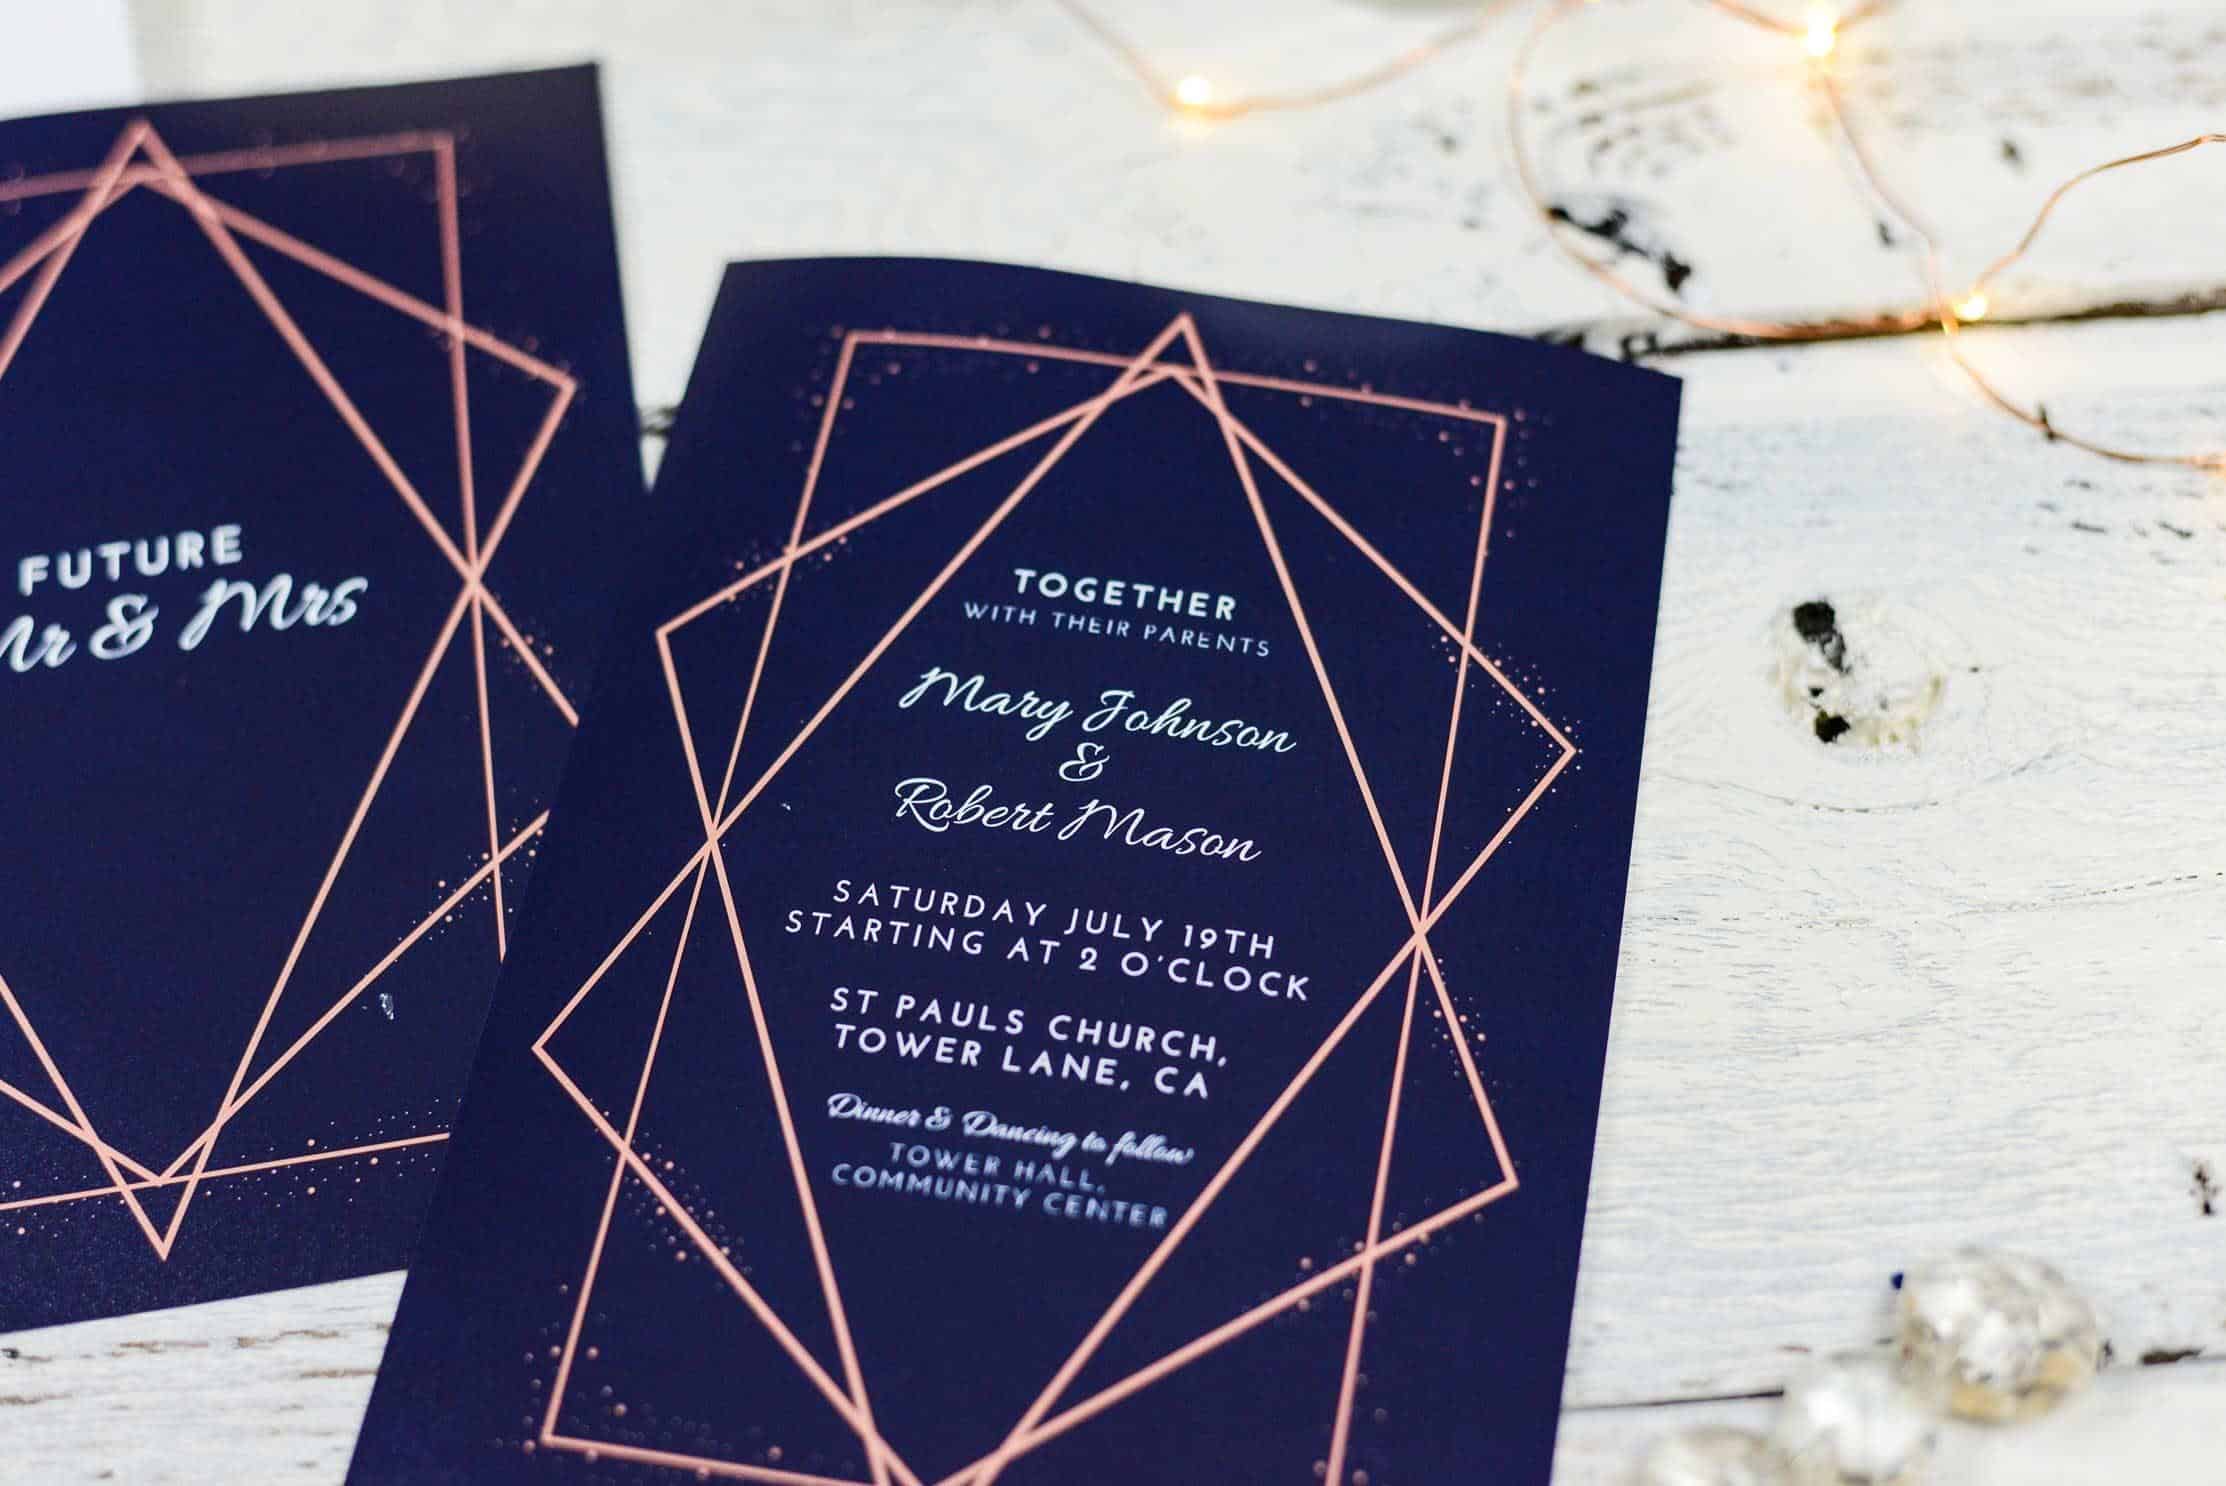 D:\Работа\SEO\GUEST POSTS\POSTS 2019\15.07.2019\Ryan Top 10 Trendy Wedding Invitations 2019\modern-wedding-invitations-moody-dark-blue-invitation-photo-by-mockaroon-on-unsplash.jpg